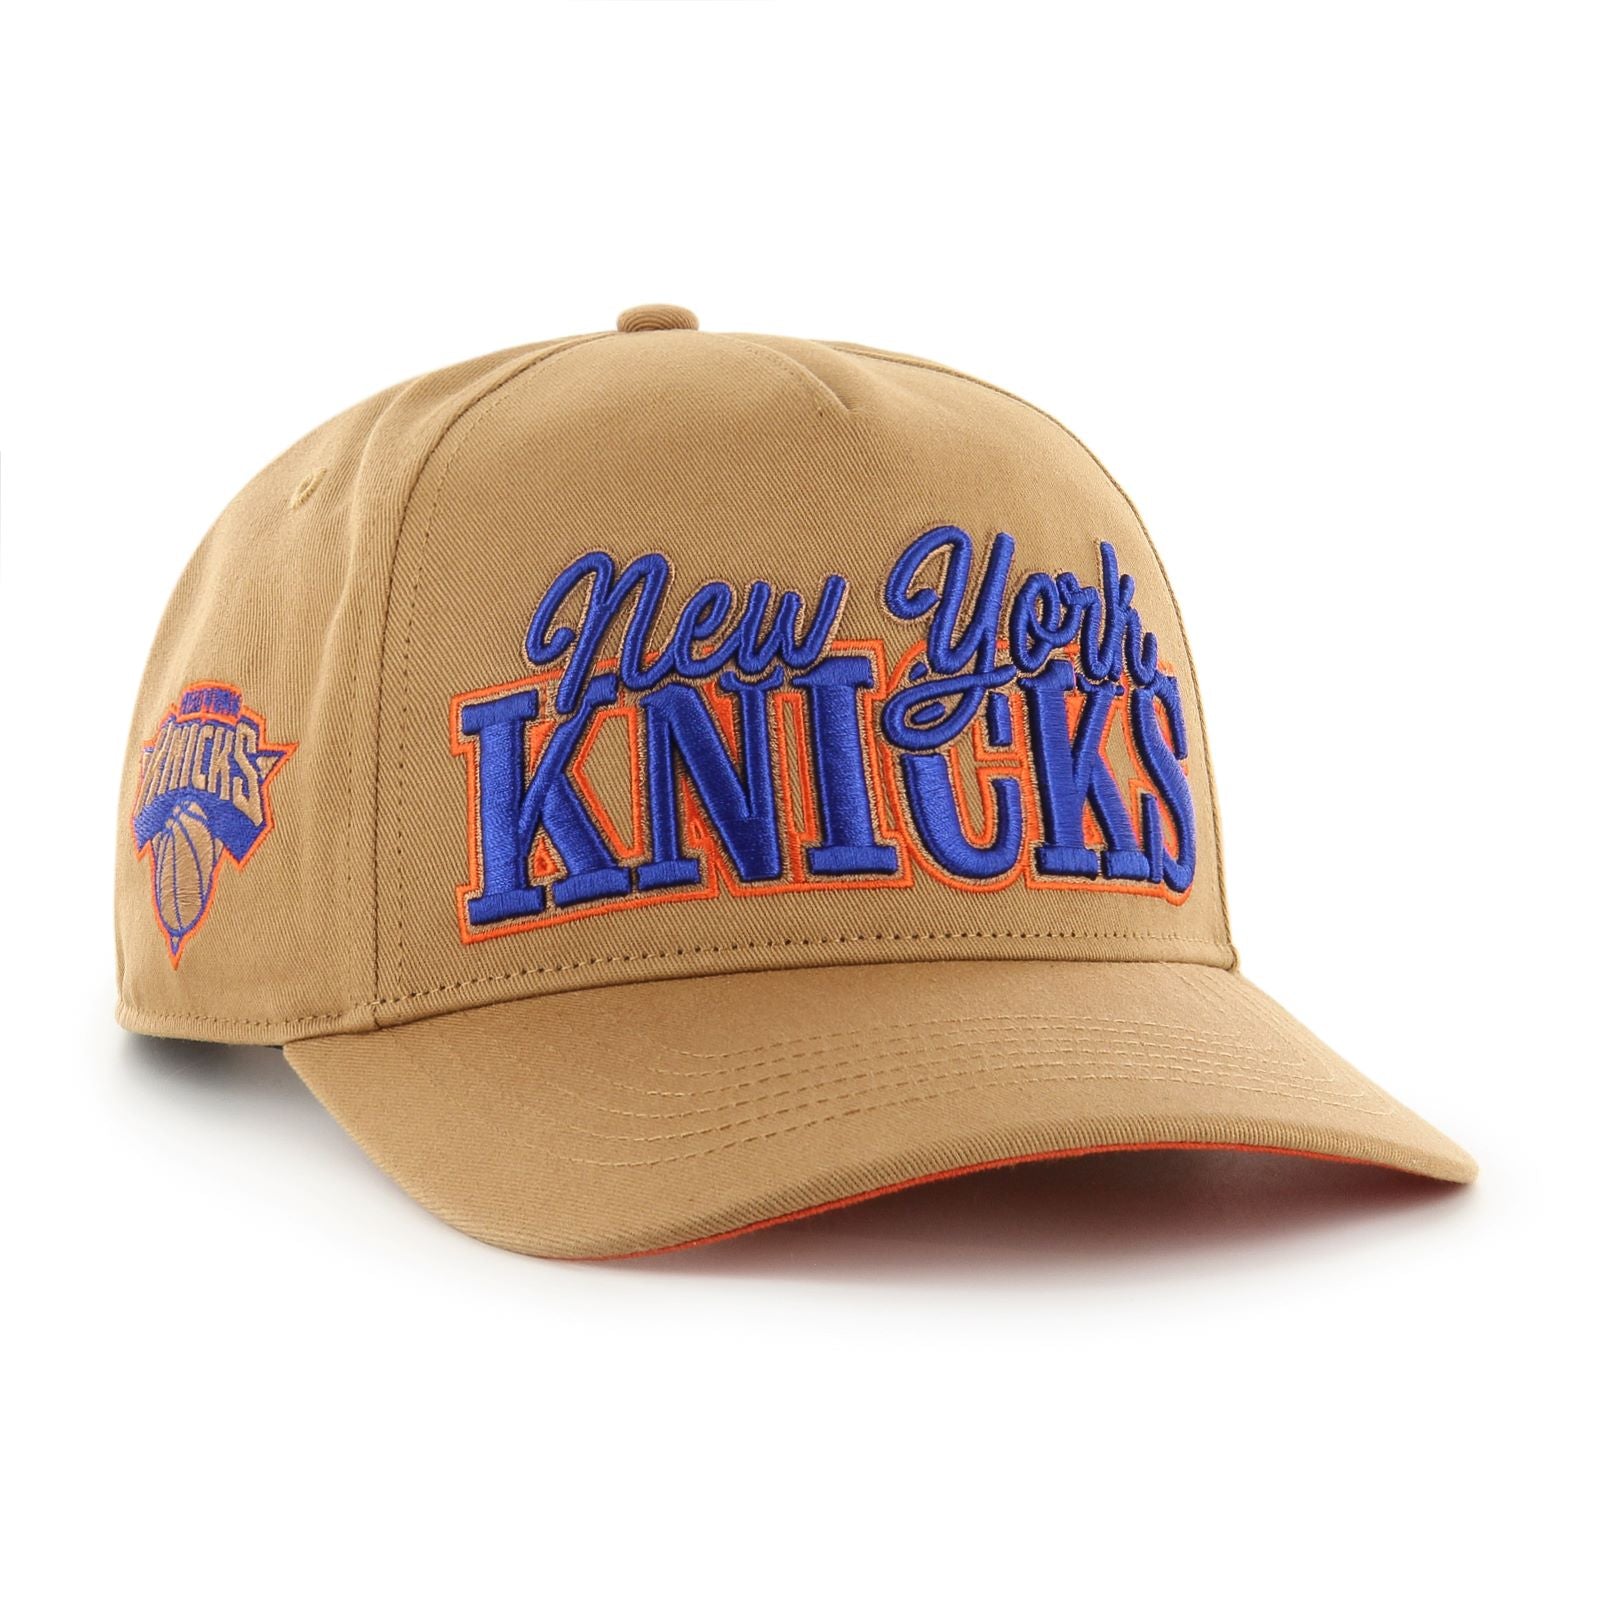 '47 Brand Knicks Camel Barnes Hitch Snapback - Angled Right View